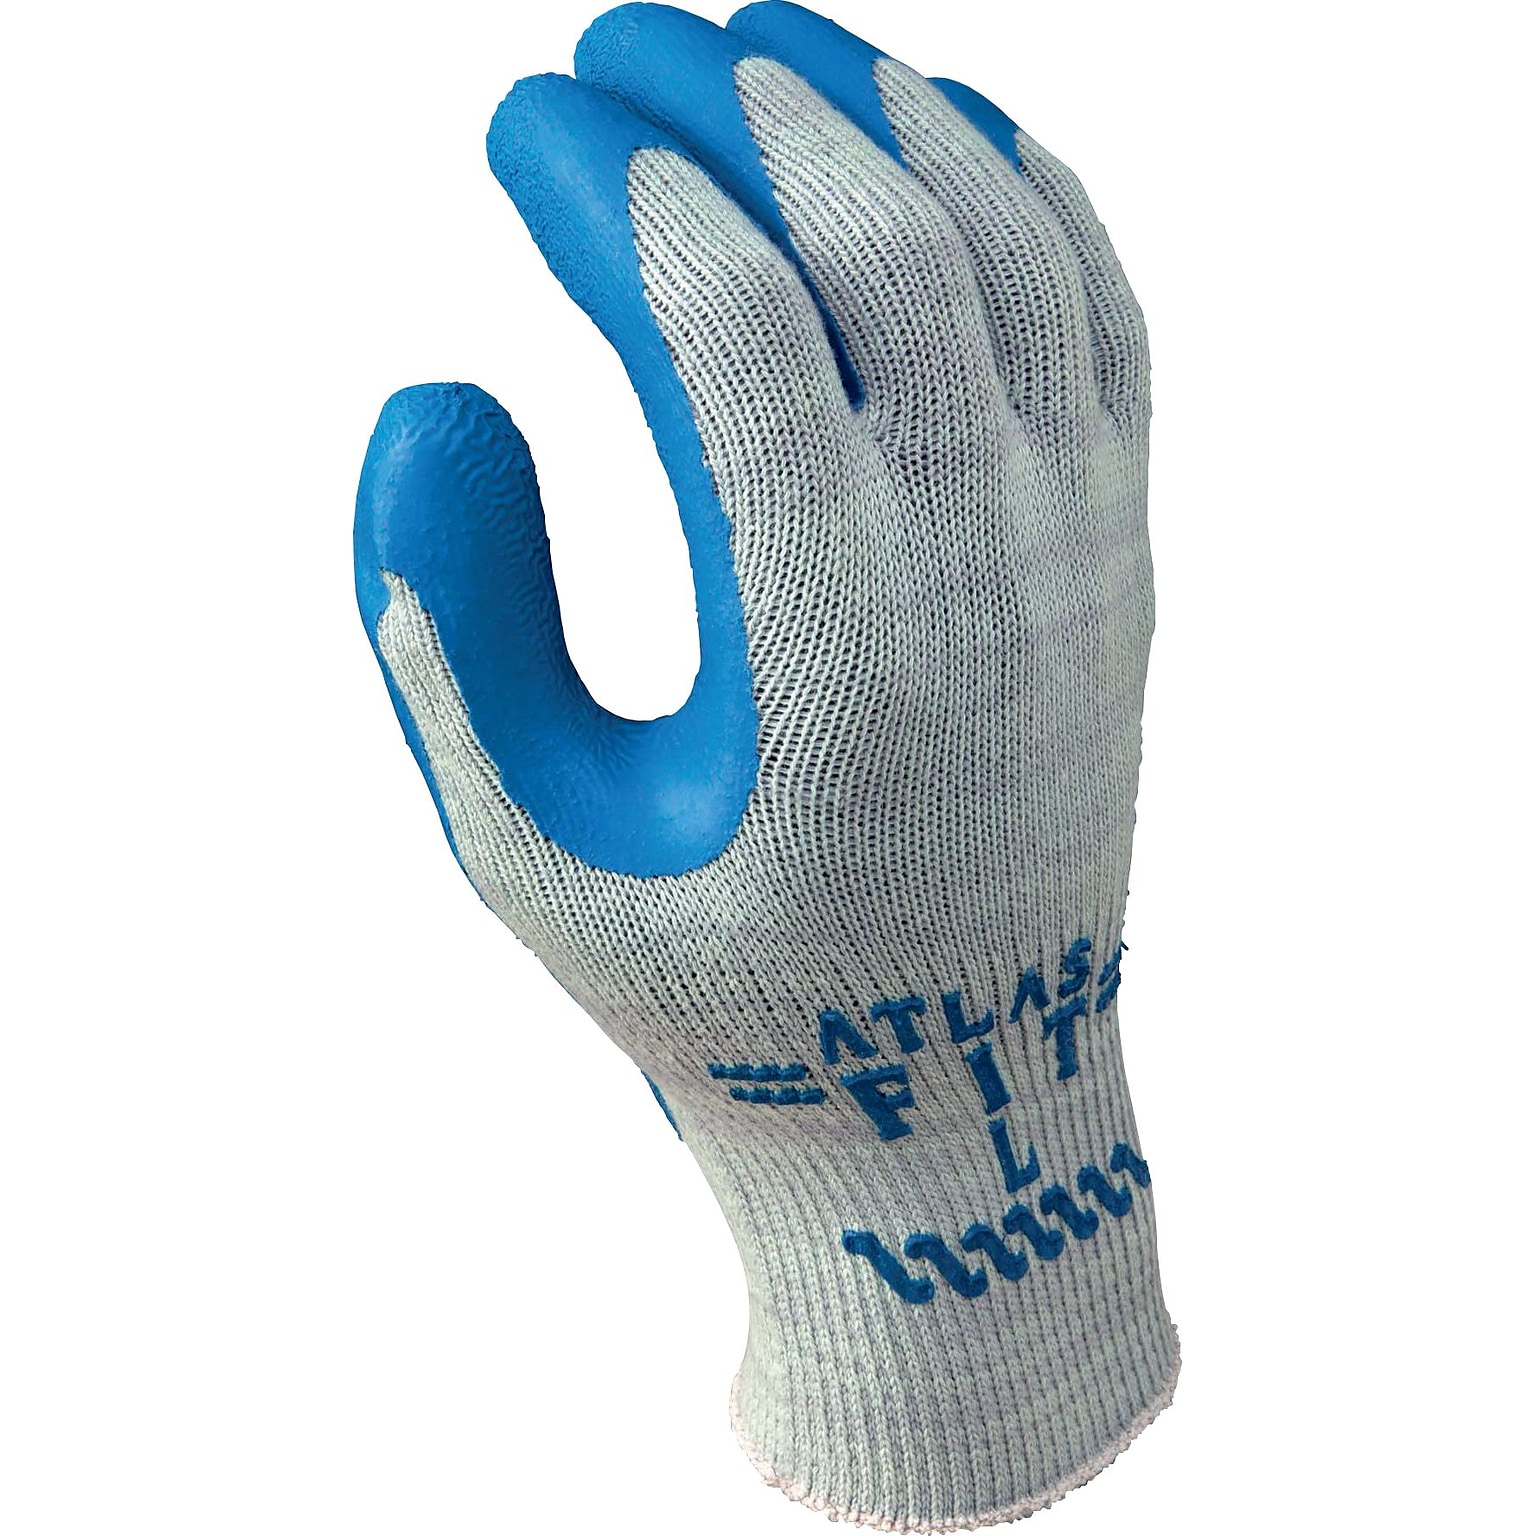 Showa Best® Glove ATLAS® Fit® 300 Rubber Coated General Purpose Gloves, XL